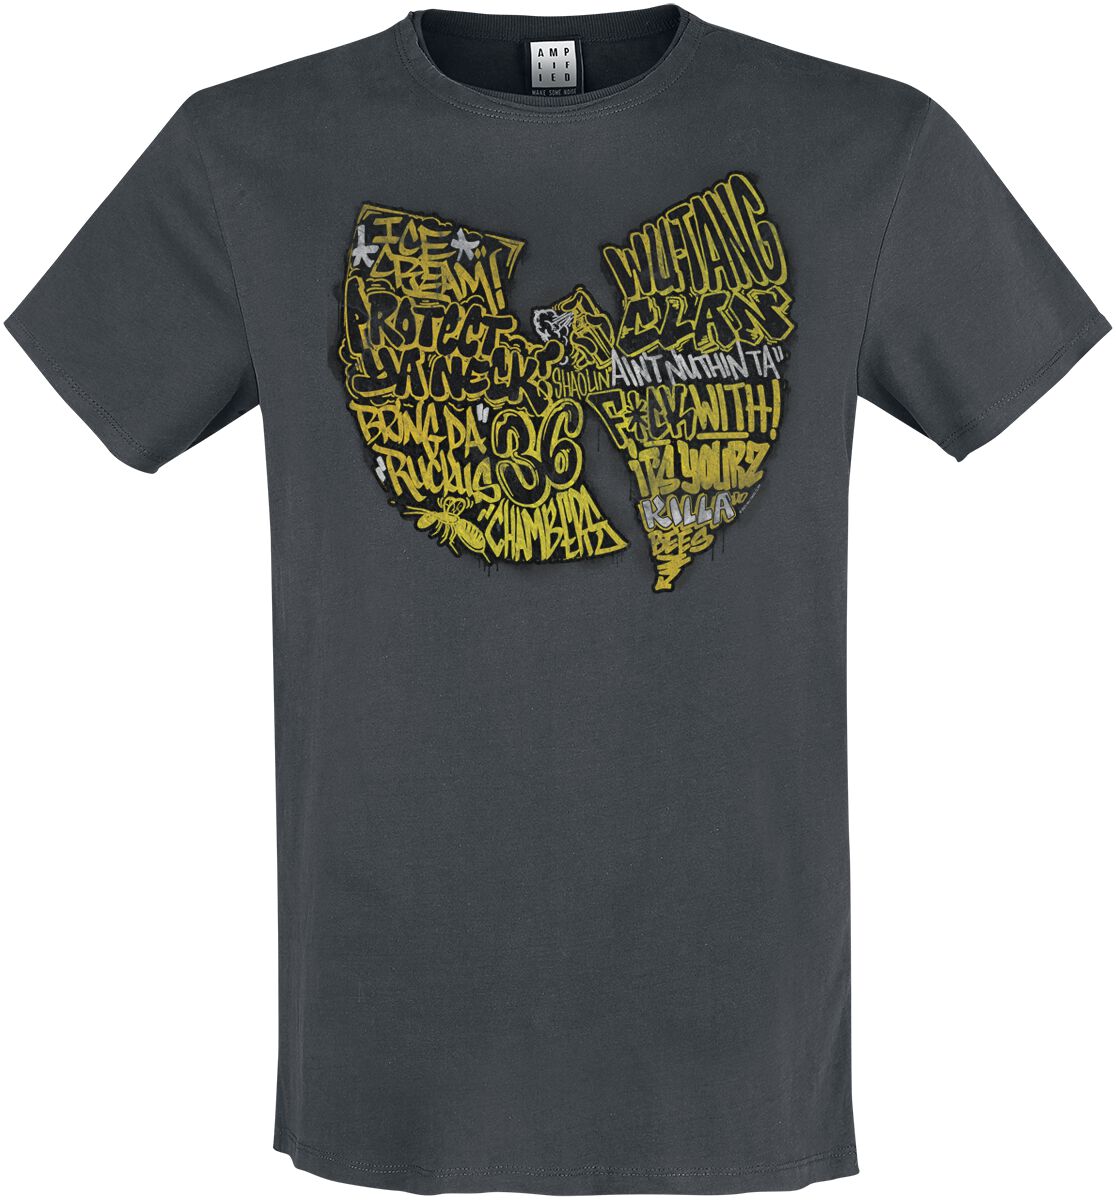 Wu-Tang Clan Amplified Collection - Graffiti Logo T-Shirt charcoal in L